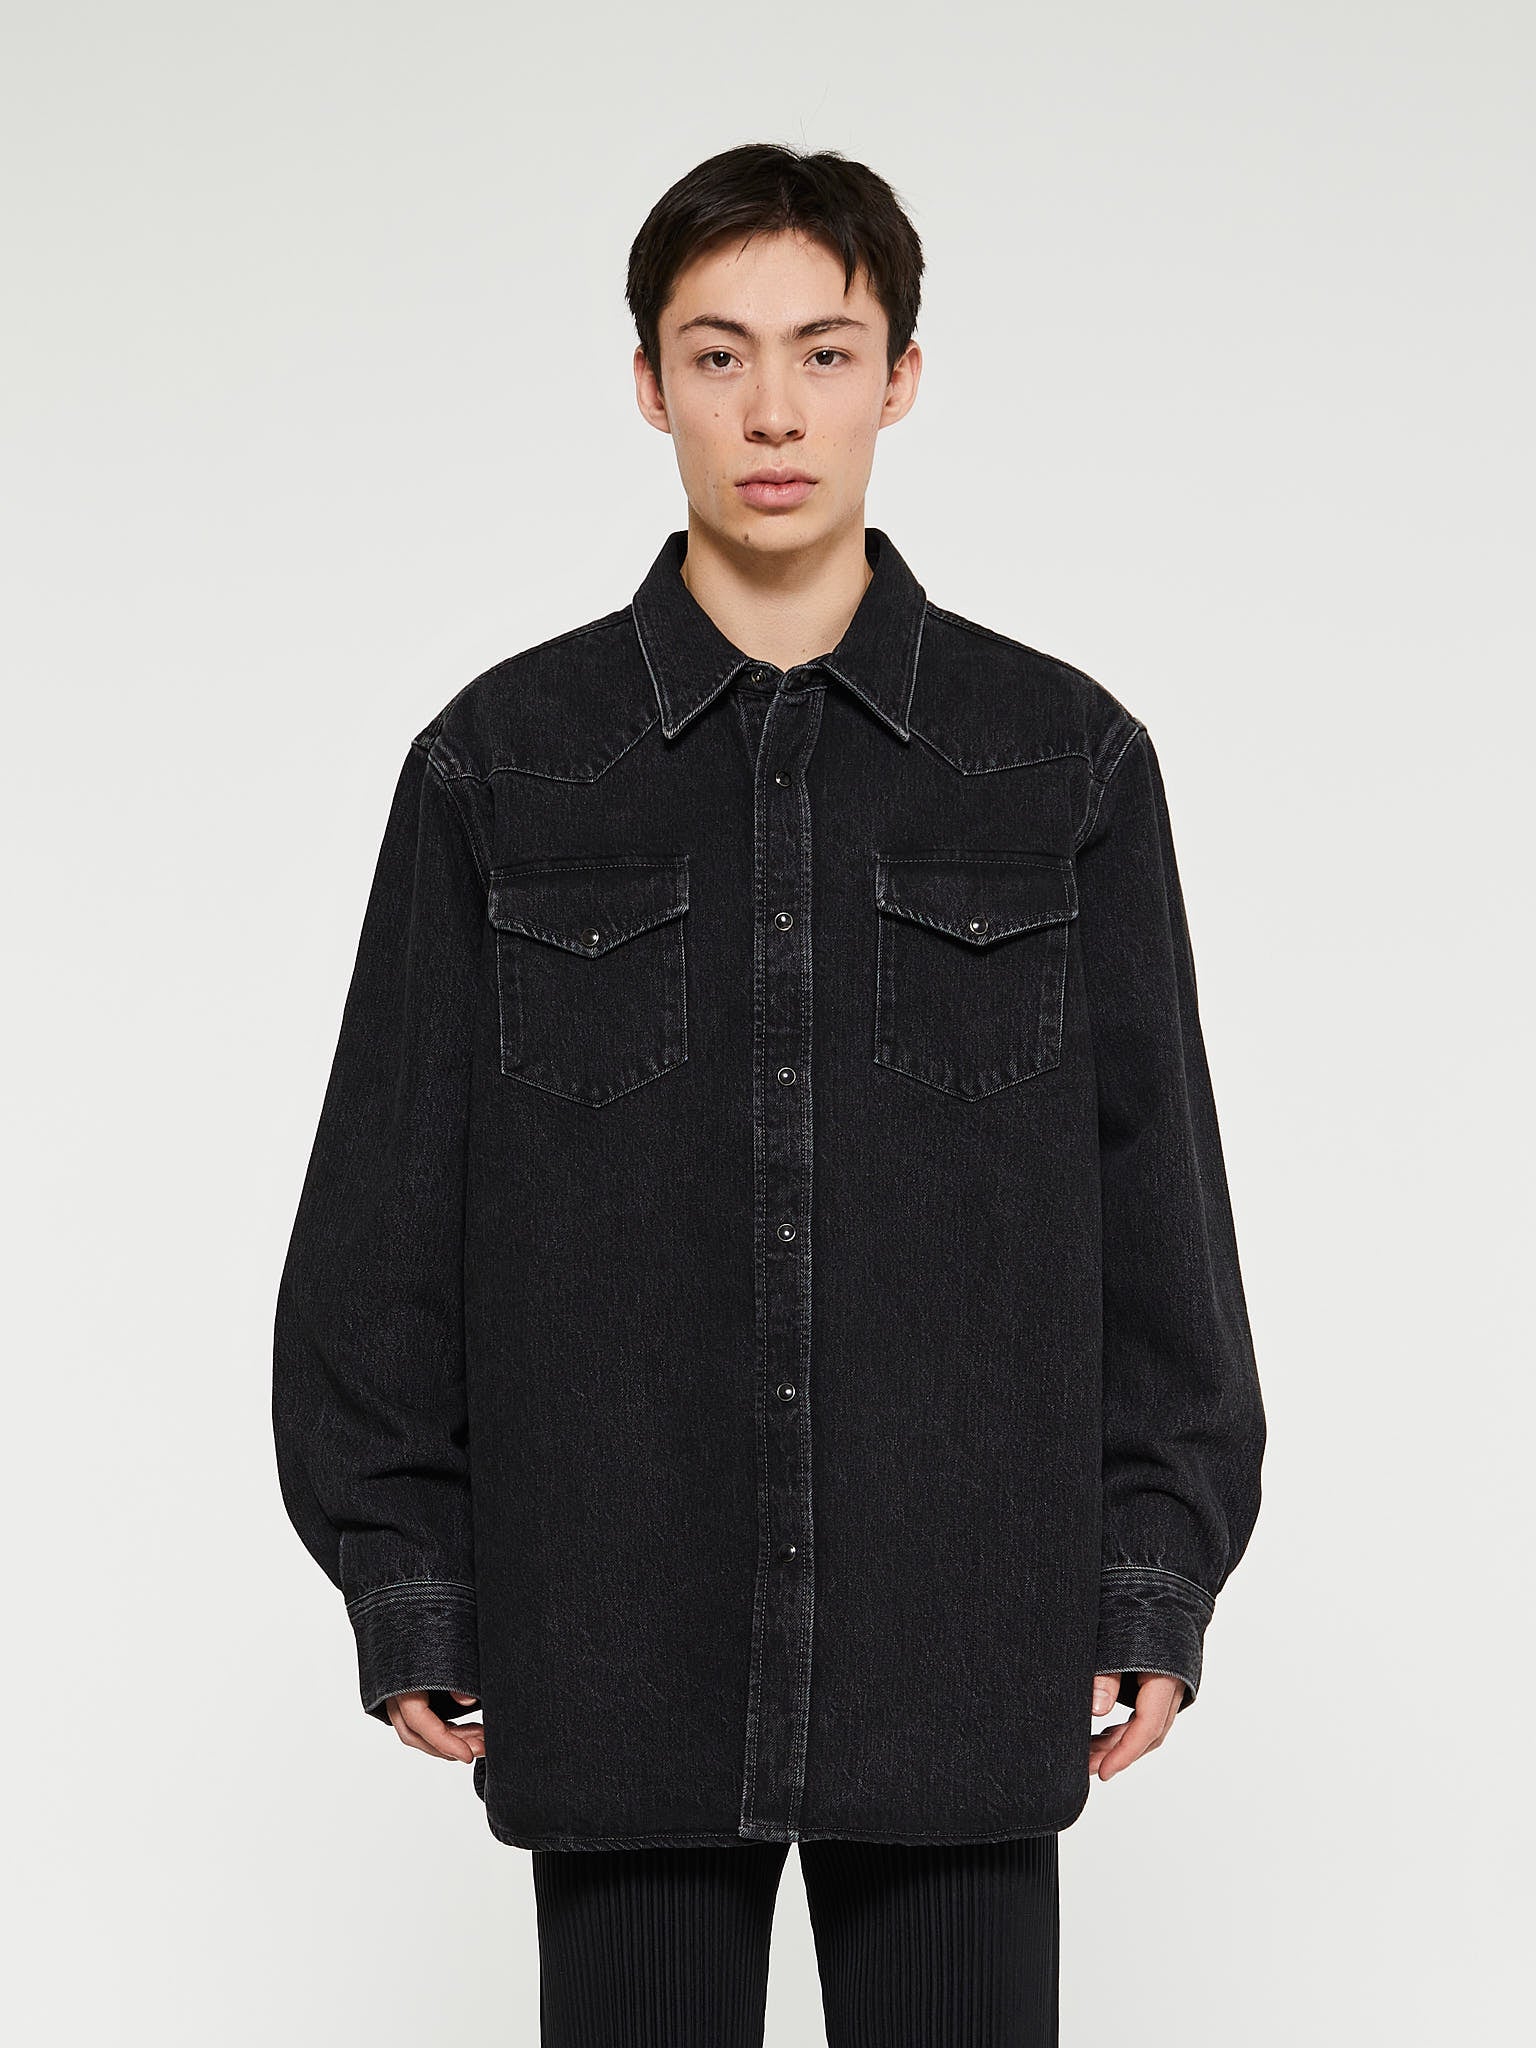 Acne Studios - Denim Button-Up Shirt in Black